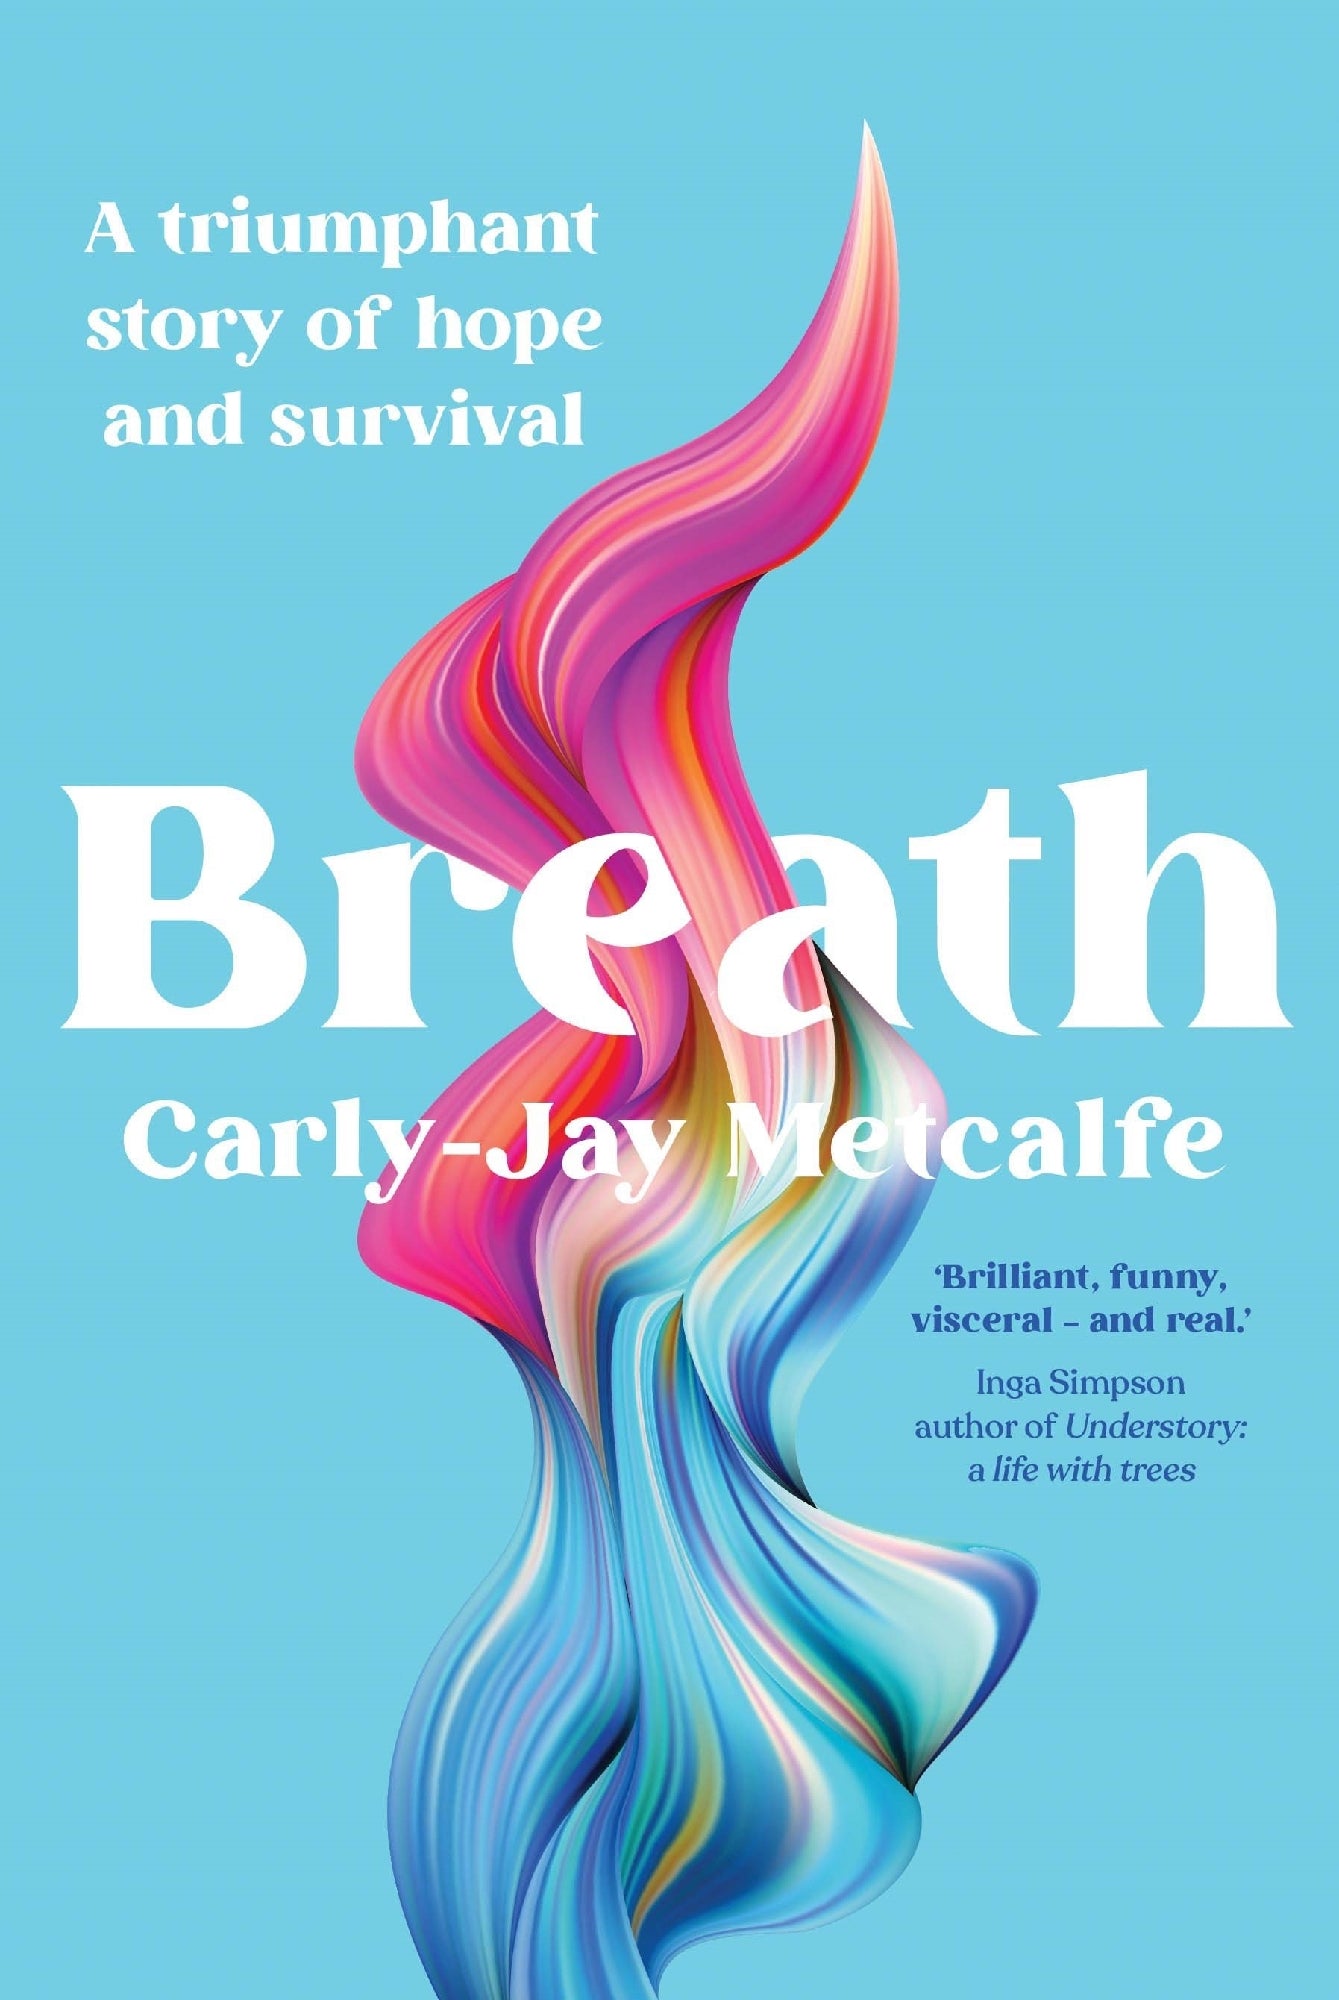 Breath - Carly-jay Metcalfe